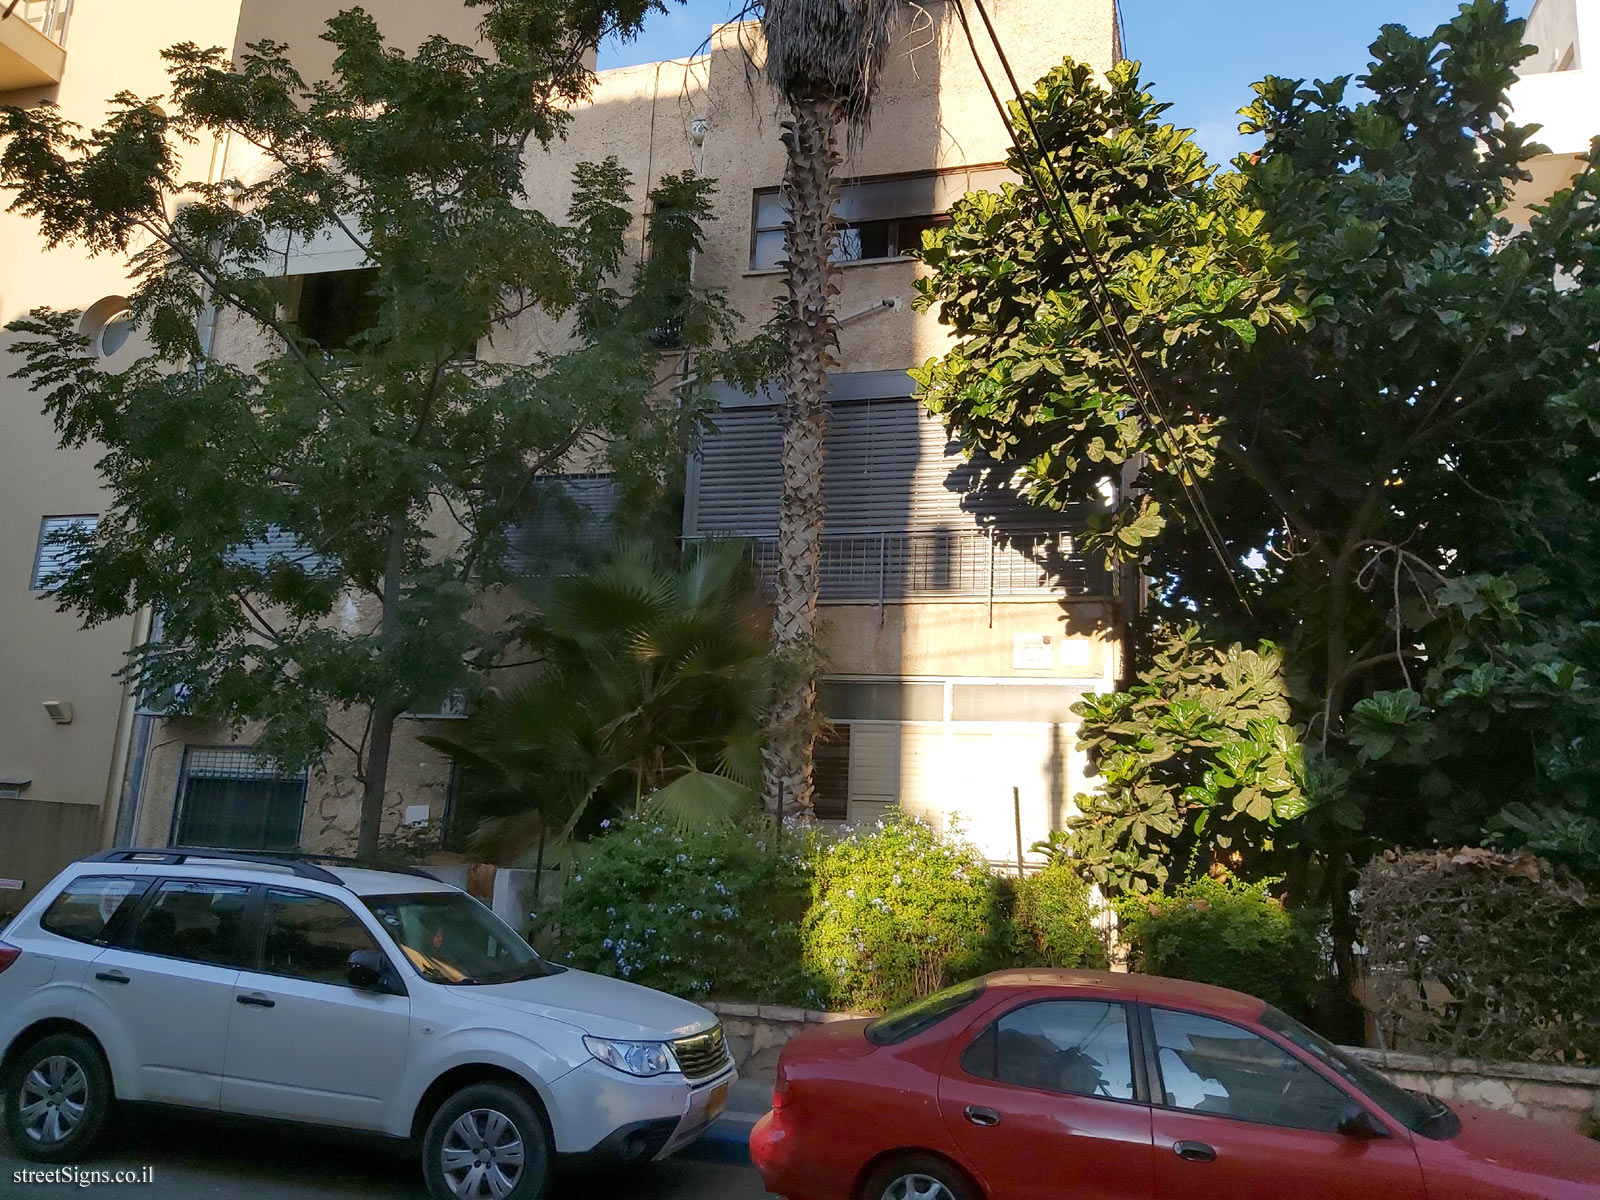 The house of Binyamin Galai - Emile Zola St 3, Tel Aviv-Yafo, Israel